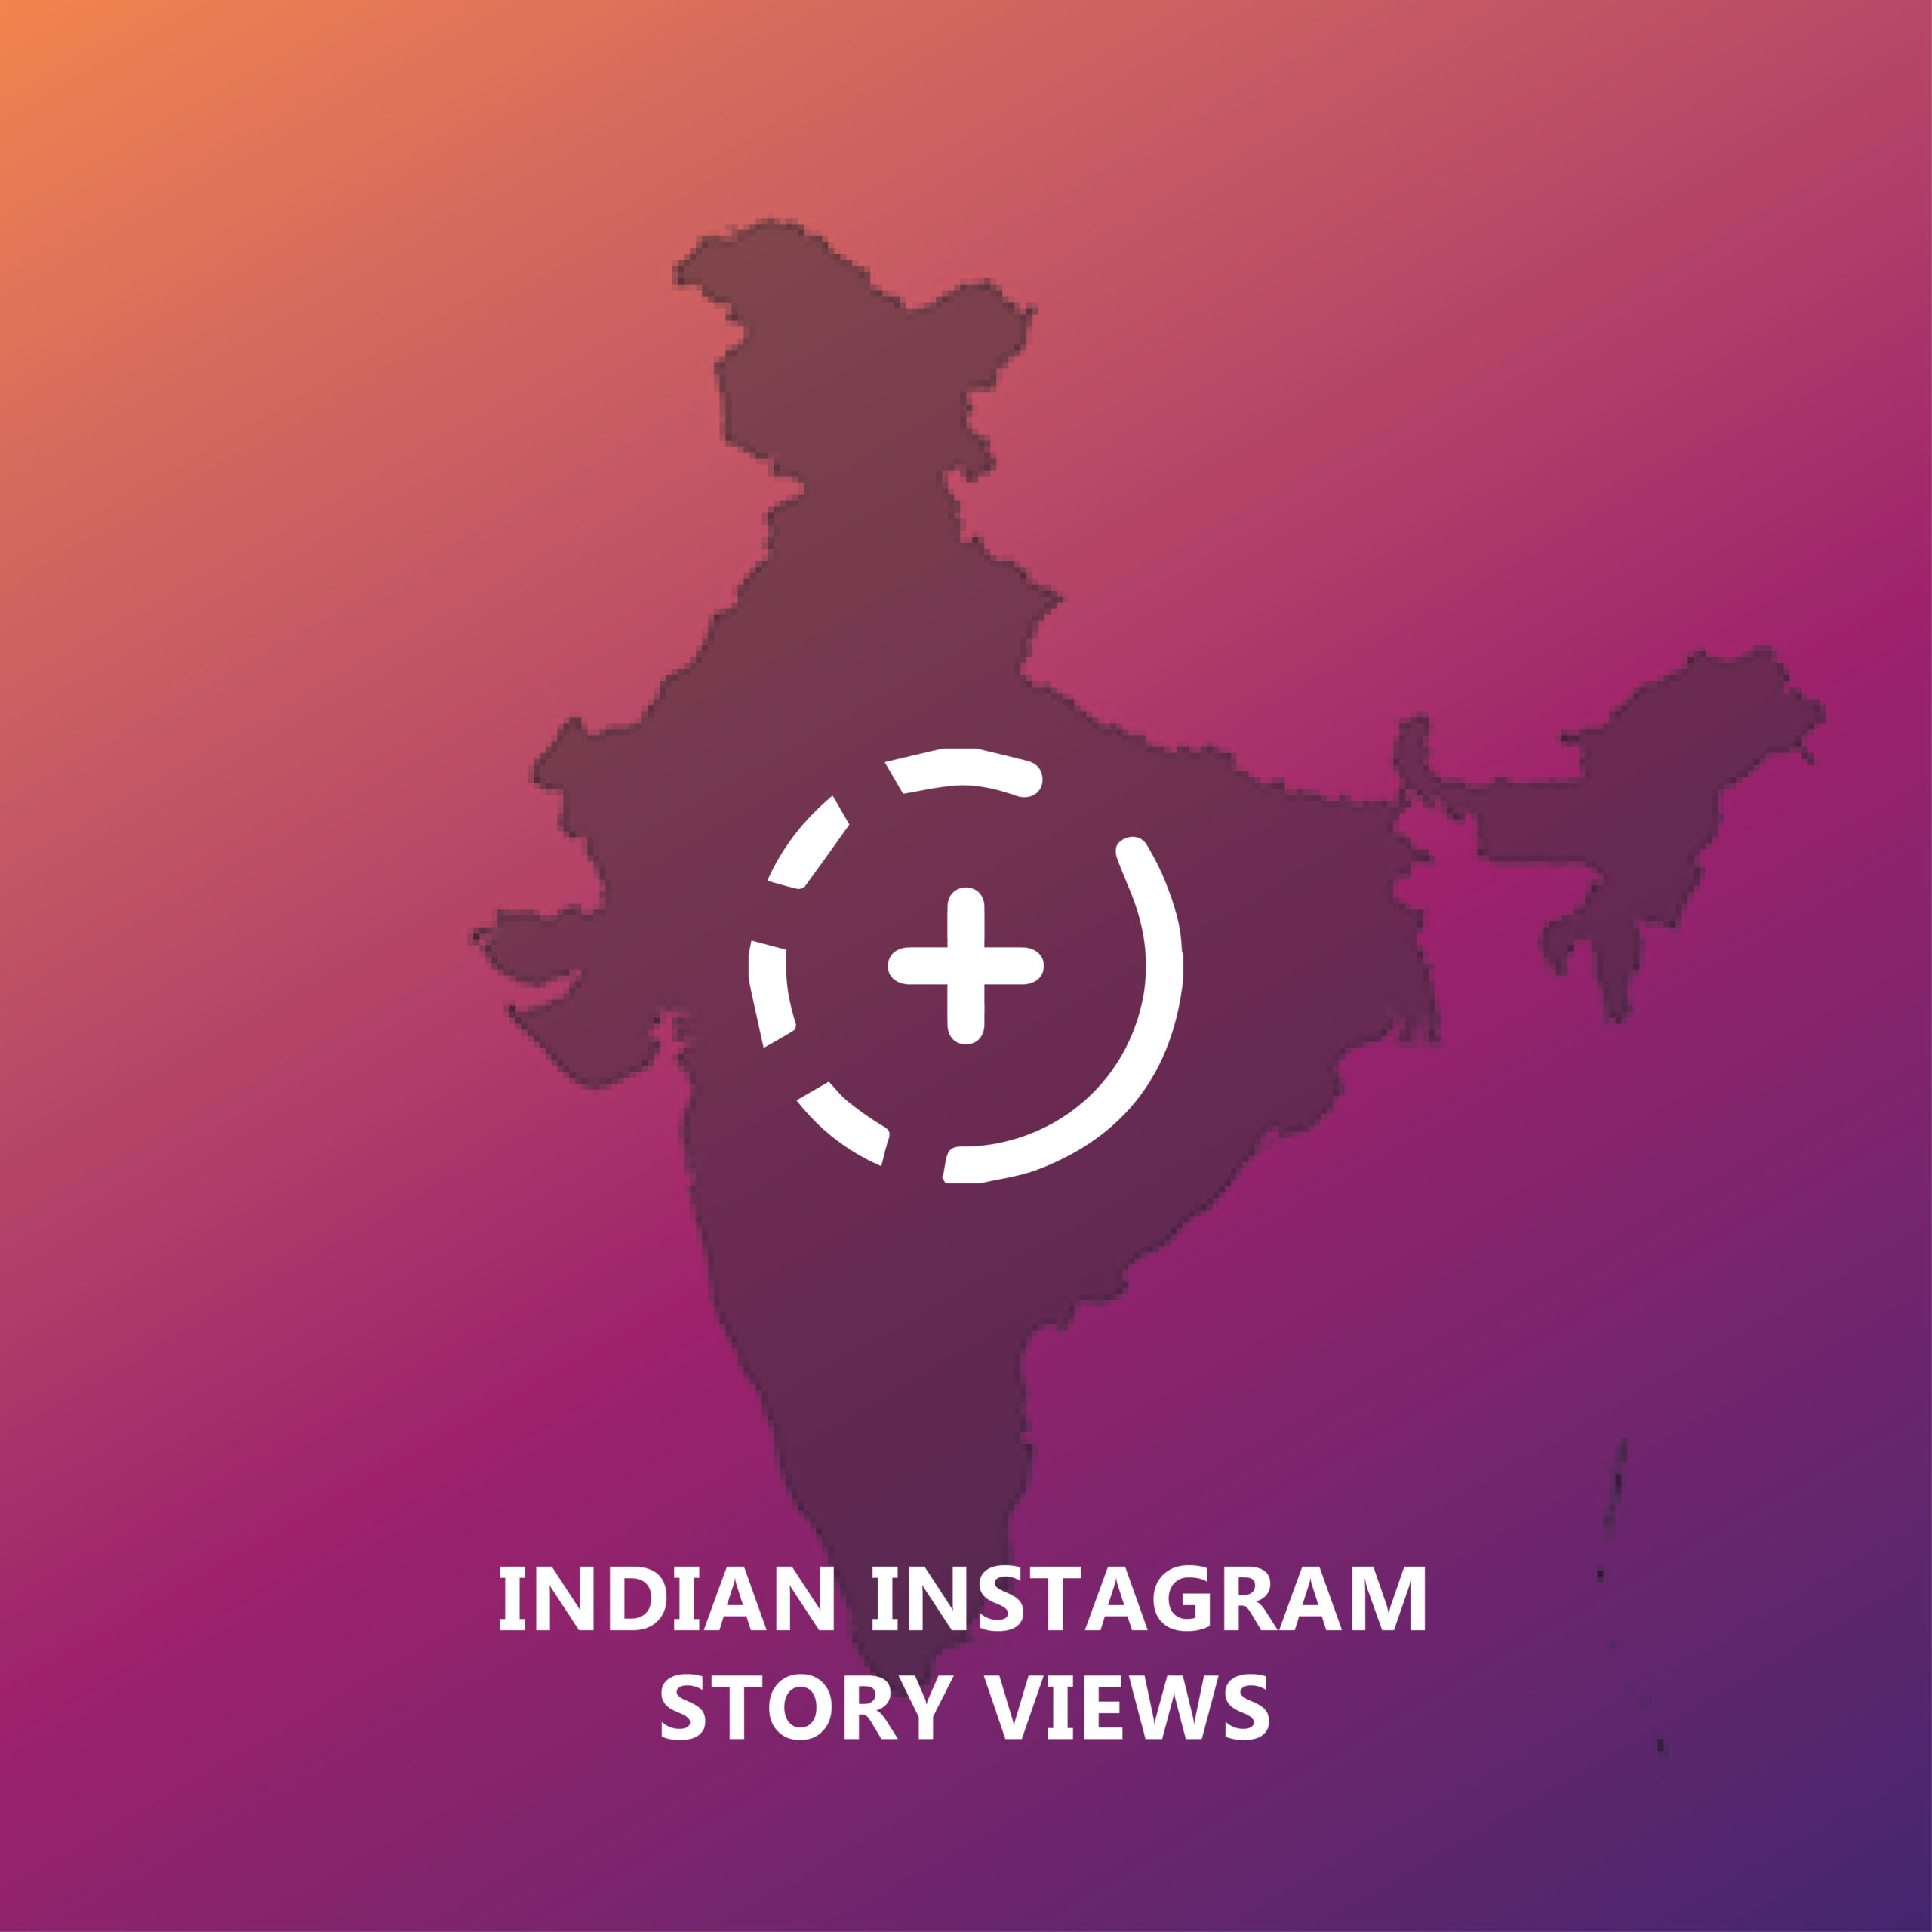 Indian Instagram Story Views